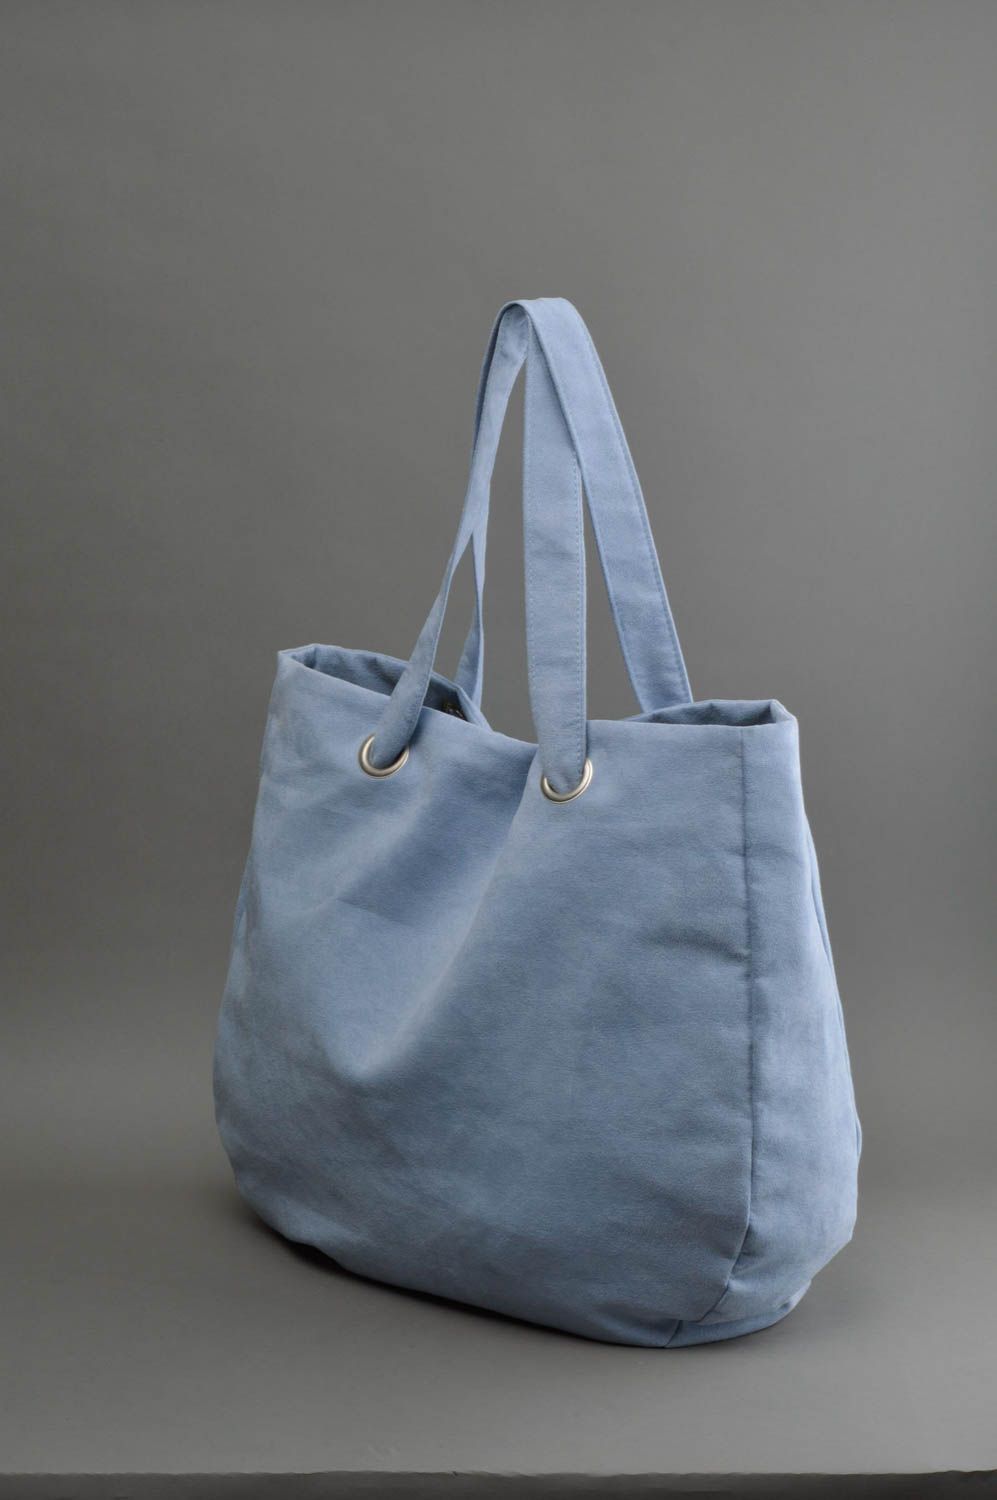 Handmade suede handbag designer purse accessories for women gift idea for  girl